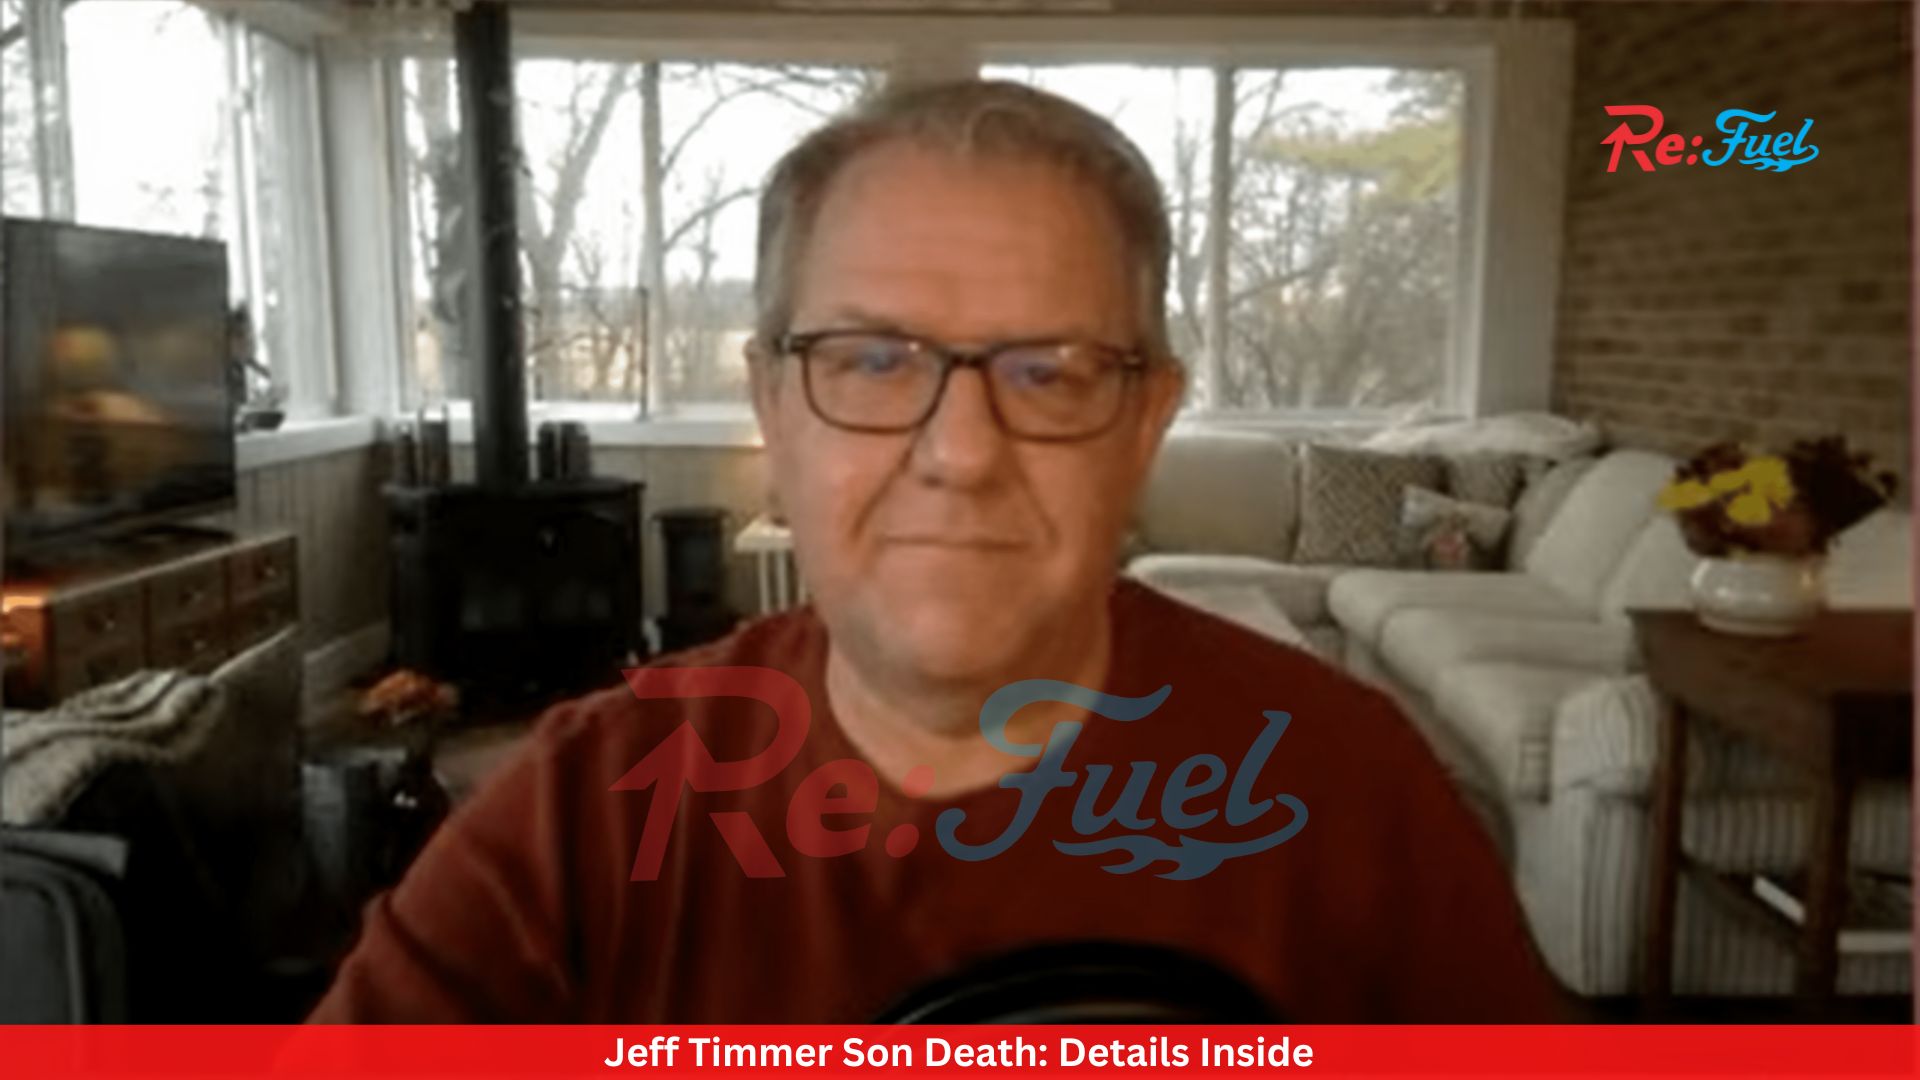 Jeff Timmer Son Death: Details Inside